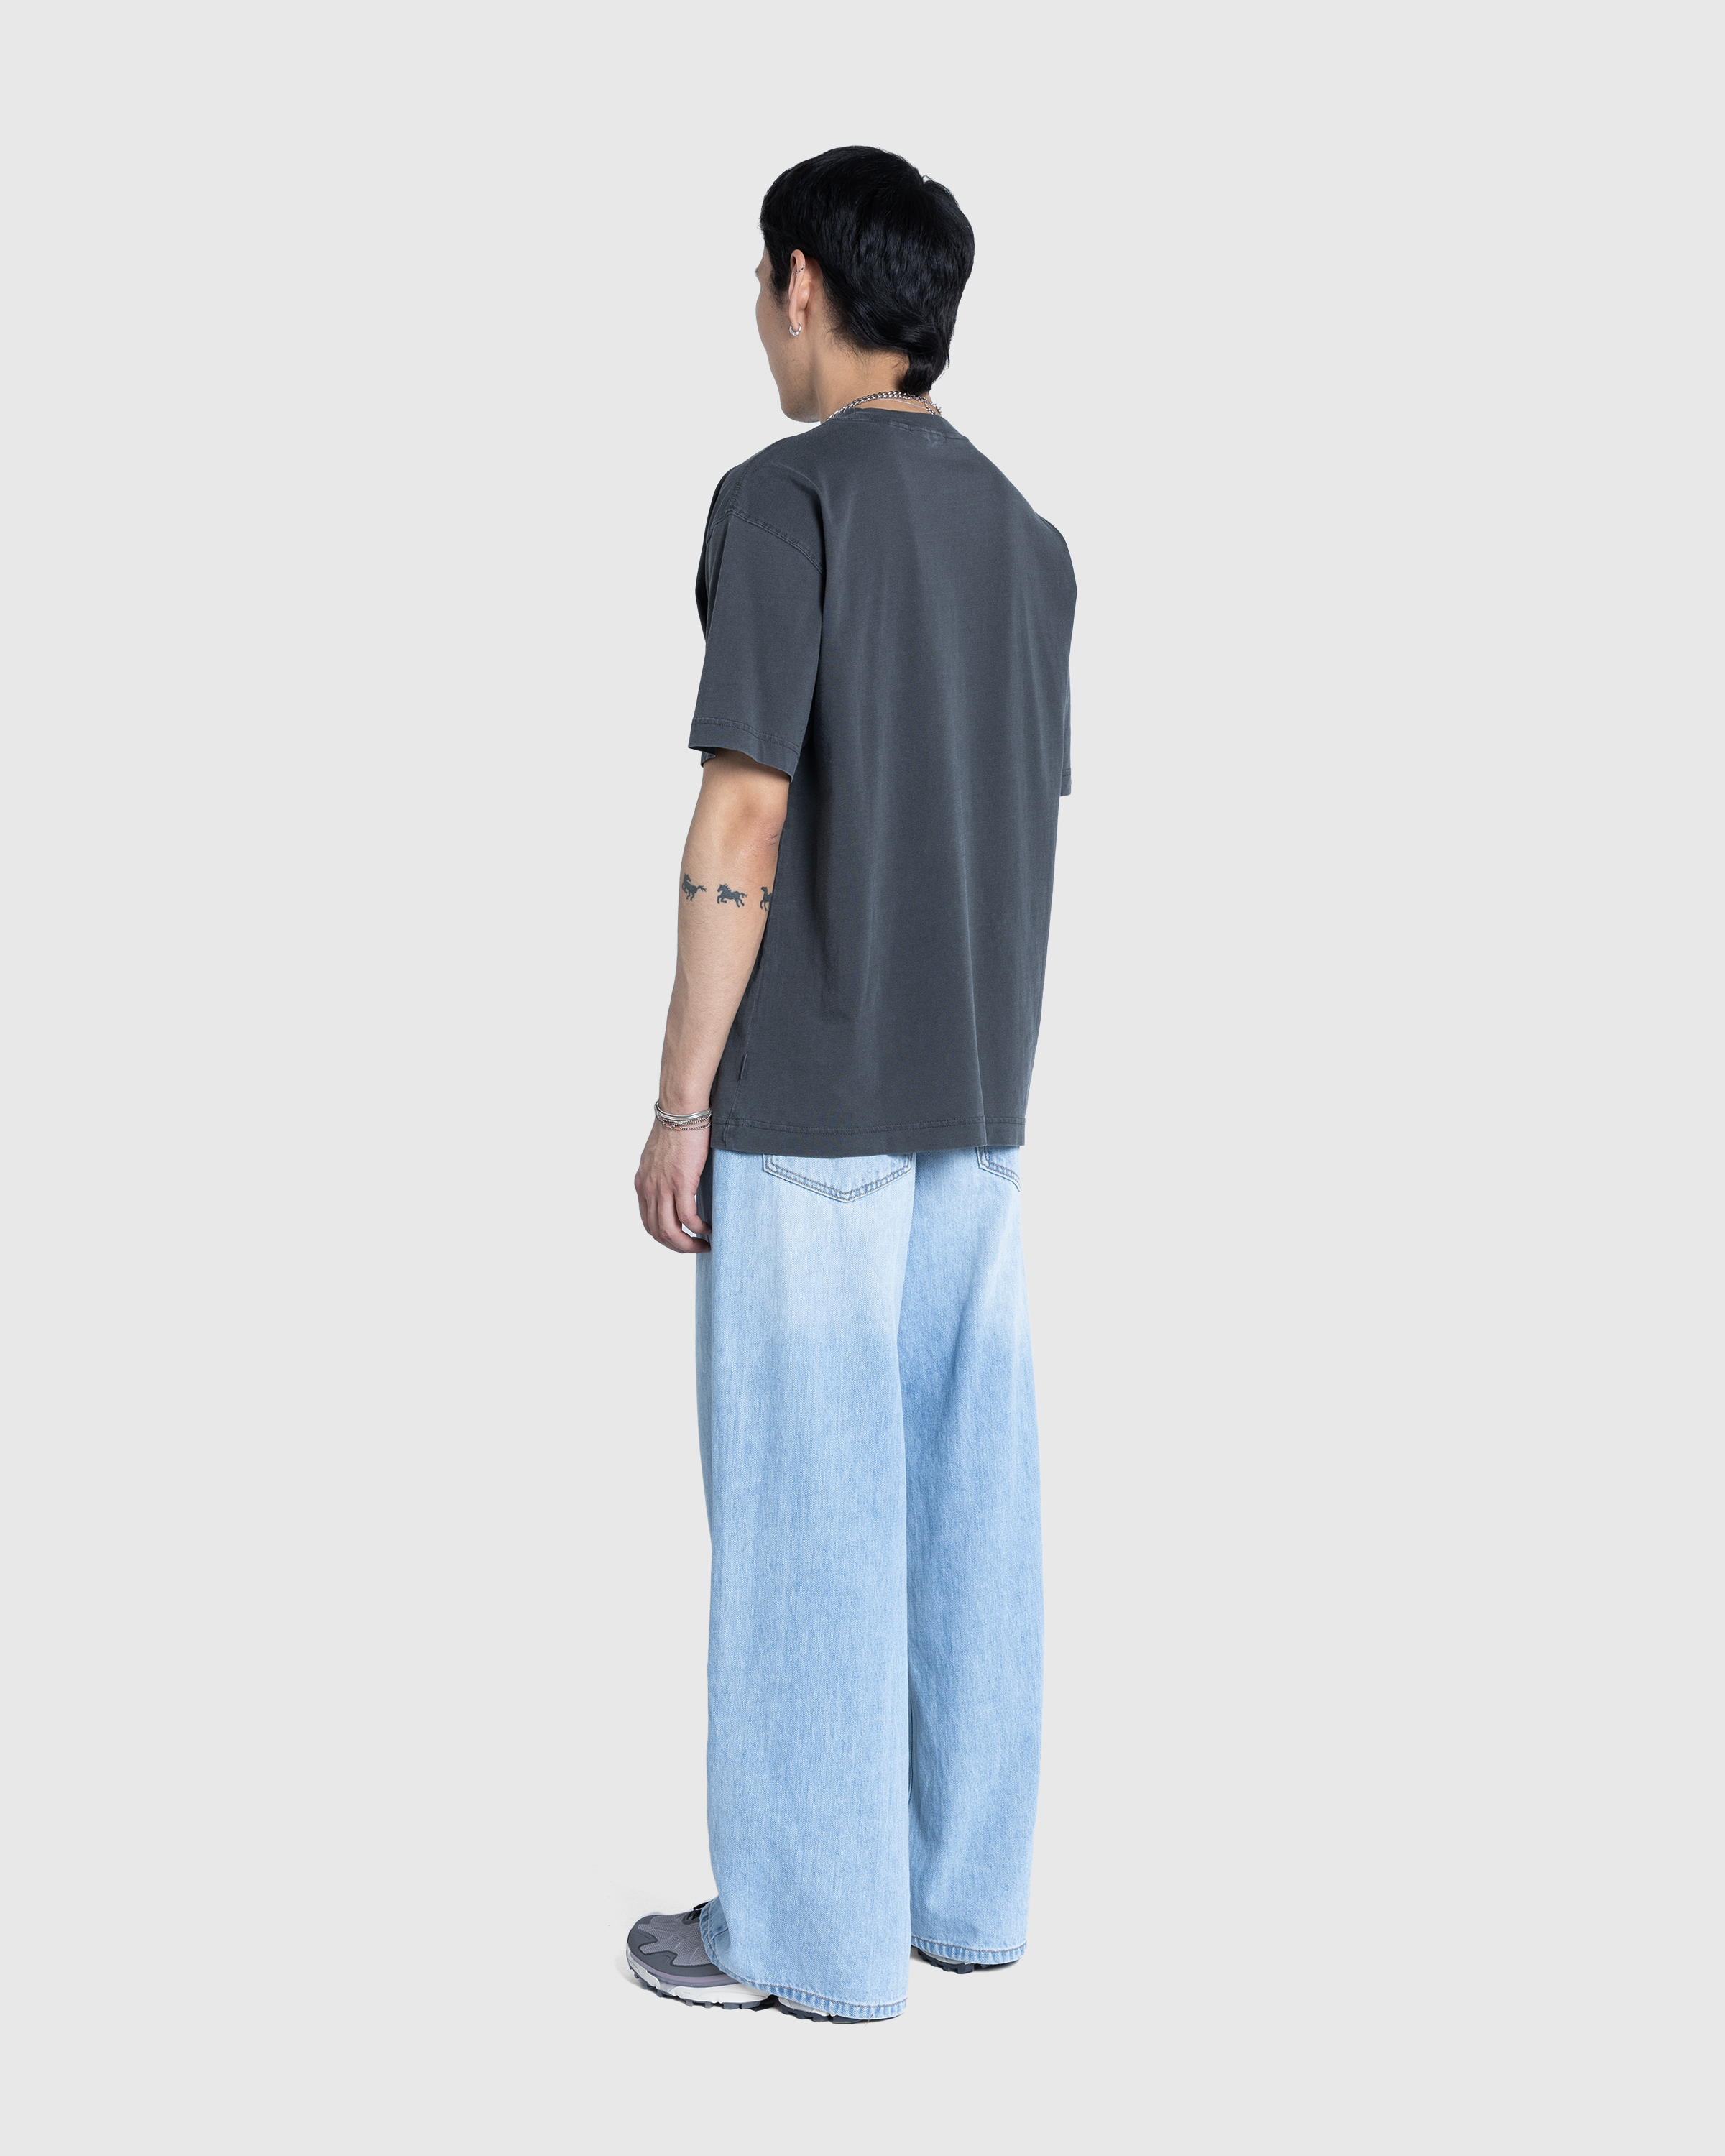 Carhartt WIP – Dune T-Shirt Charcoal/Garment Dyed - Tops - Grey - Image 4